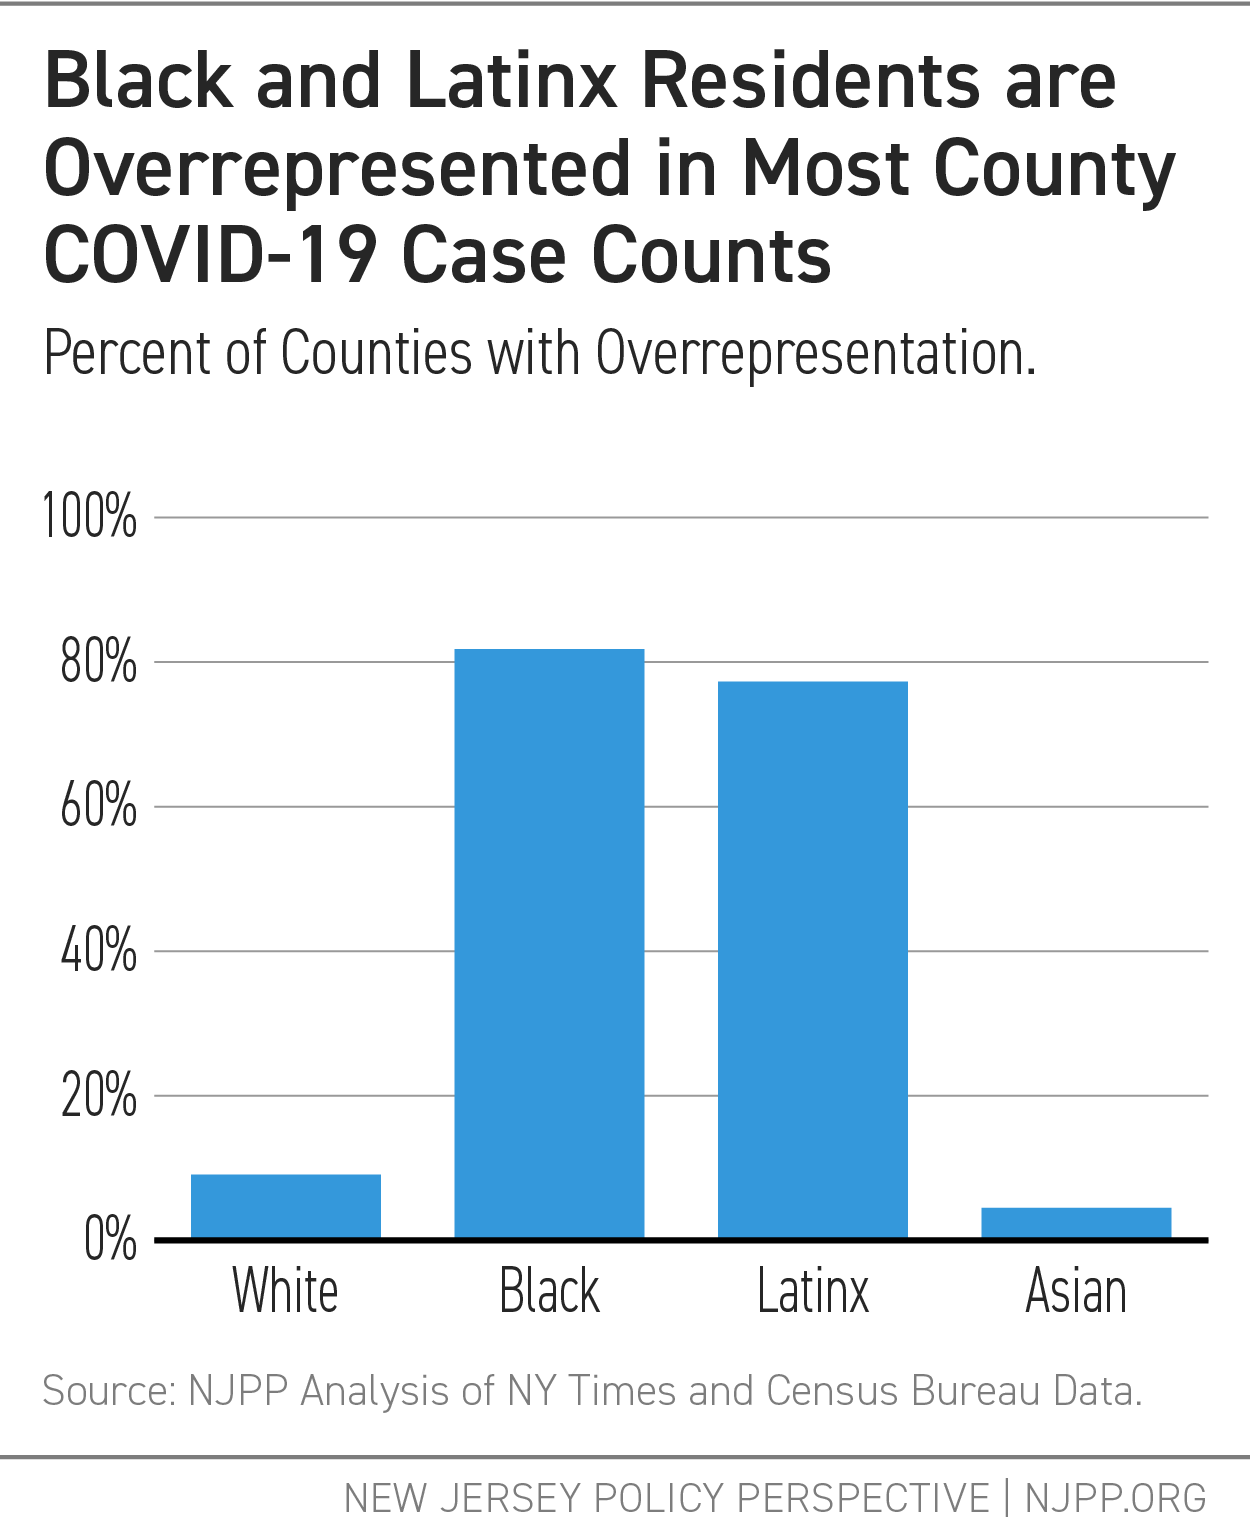 Georgetown Report Finds Large Disparities, Racial Inequity in US Women's  Well-Being